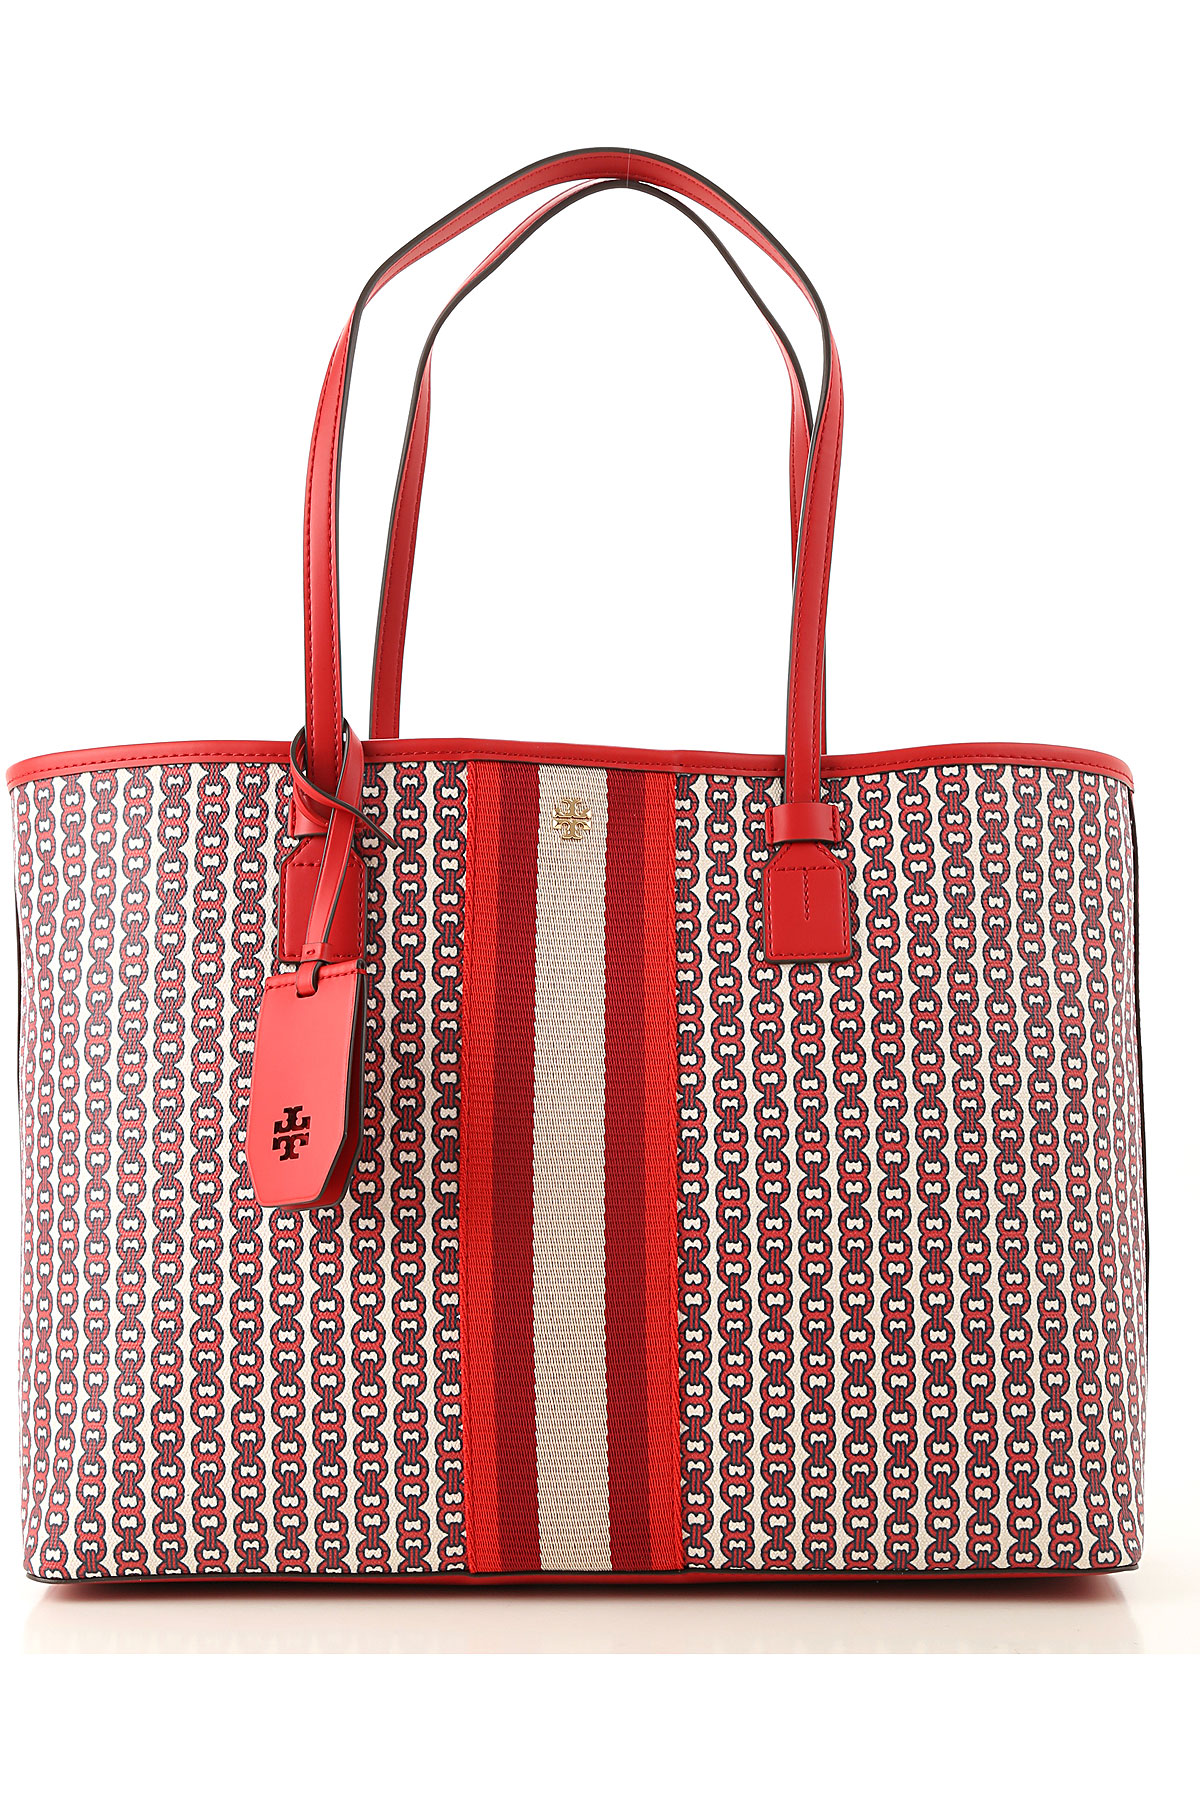 Handbags Tory Burch, Style code: 53303-939-B583